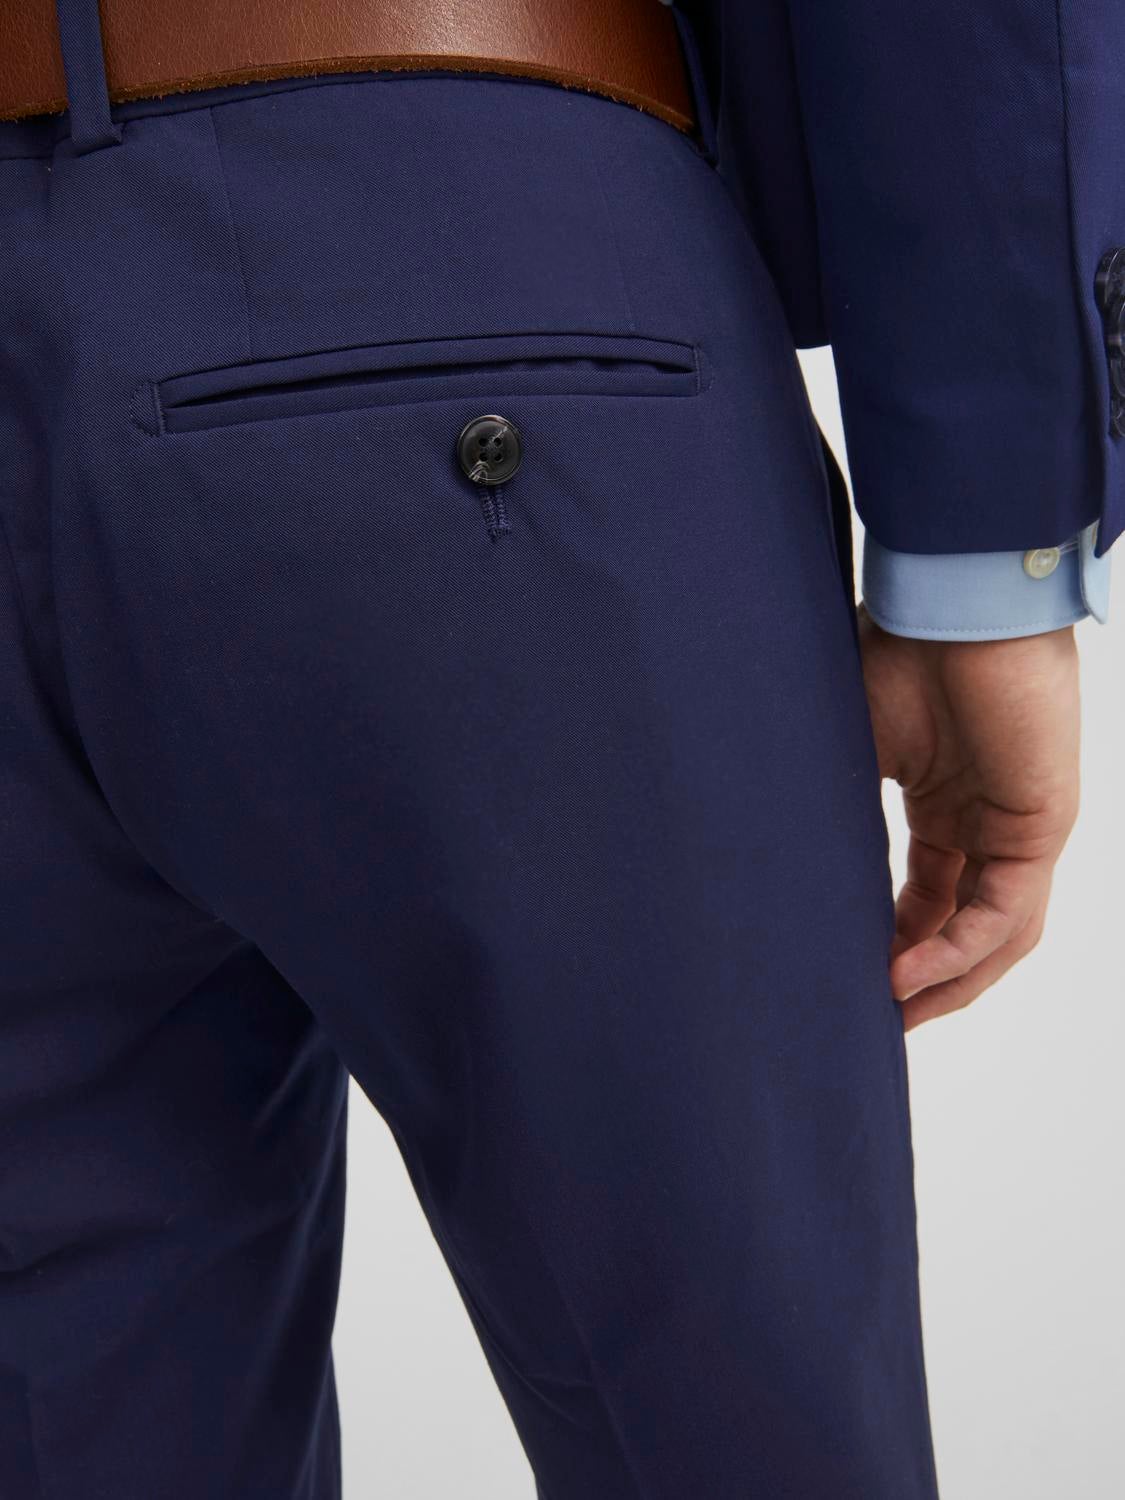 Charles Tyrwhitt Sharkskin Ultimate Performance Slim Fit Suit Trousers,  Grey at John Lewis & Partners